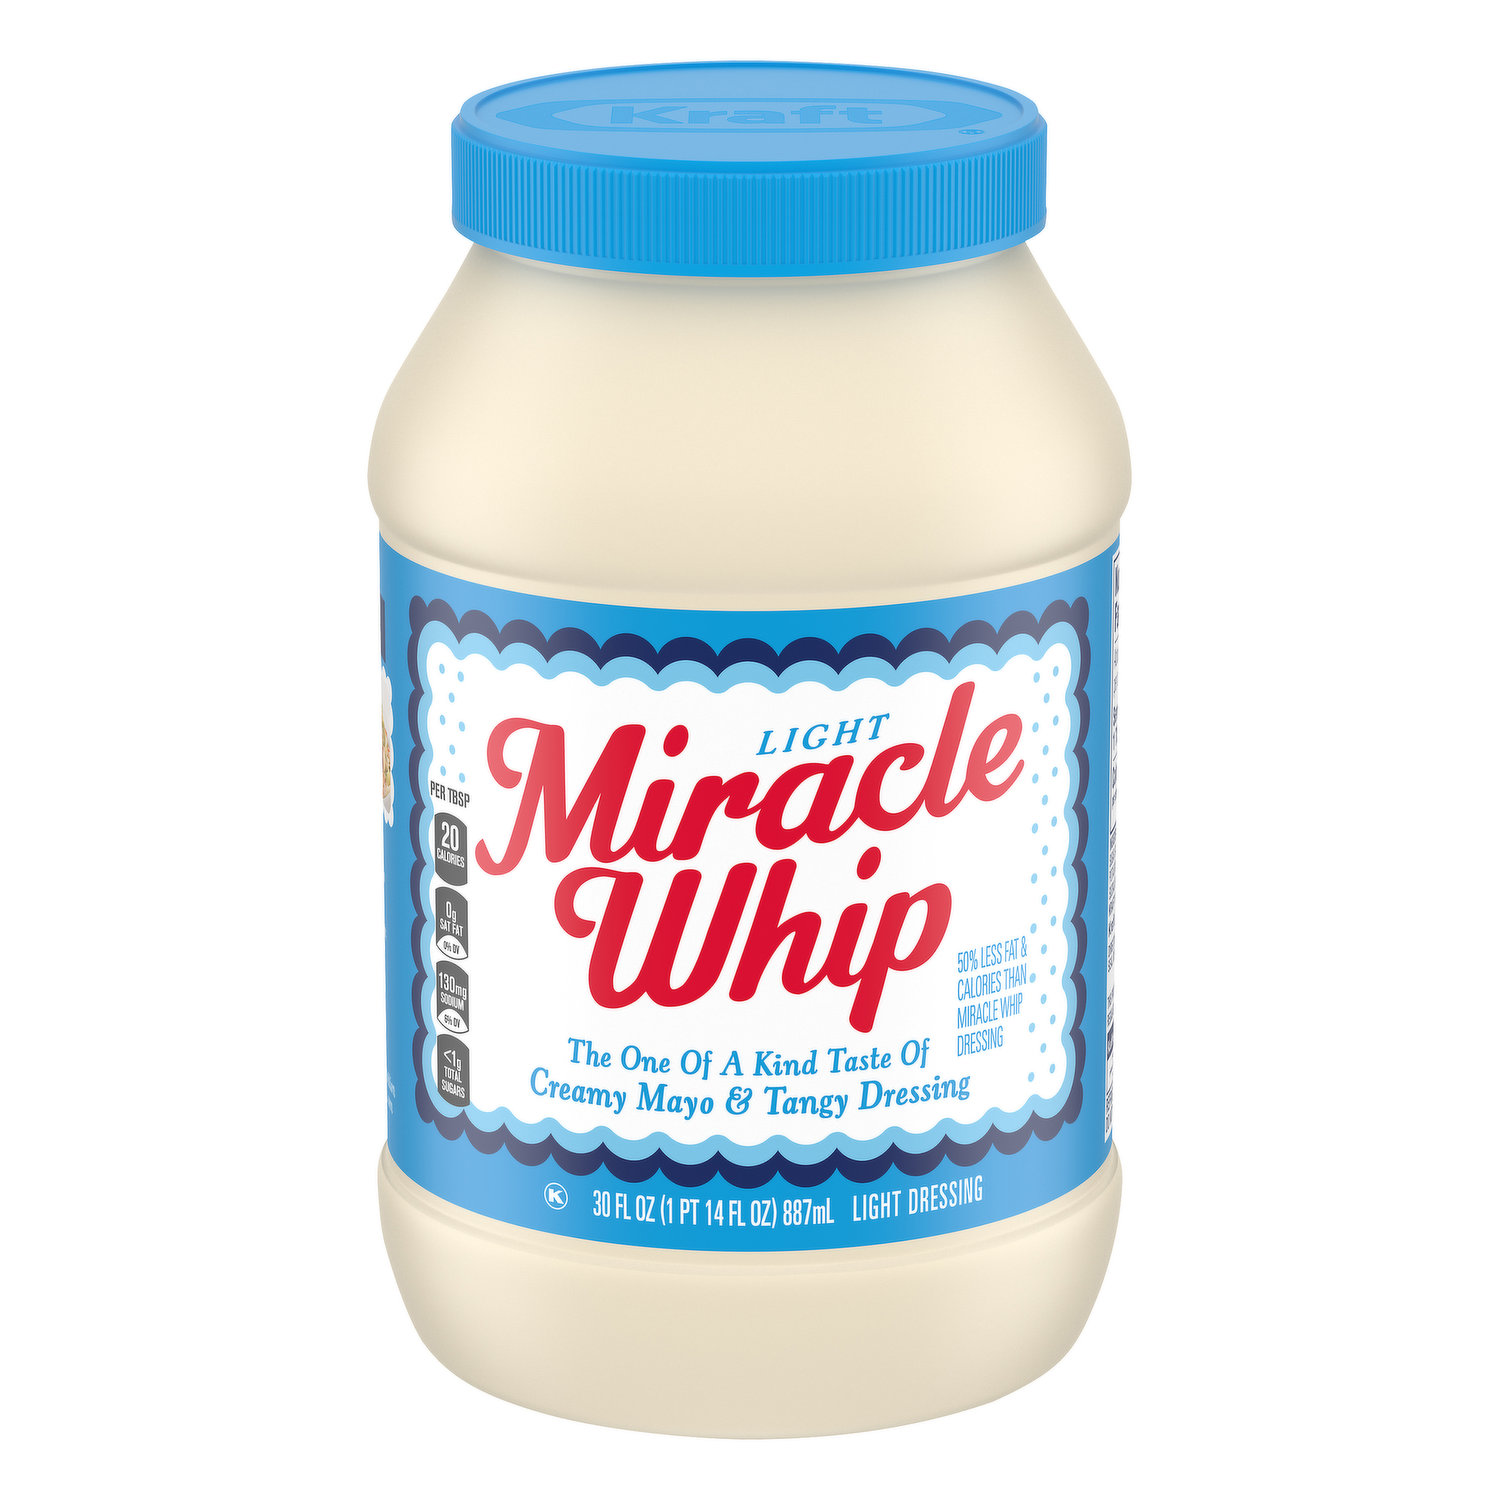 Miracle Whip Light Mayo-like Dressing, 19 fl oz Bottle - DroneUp